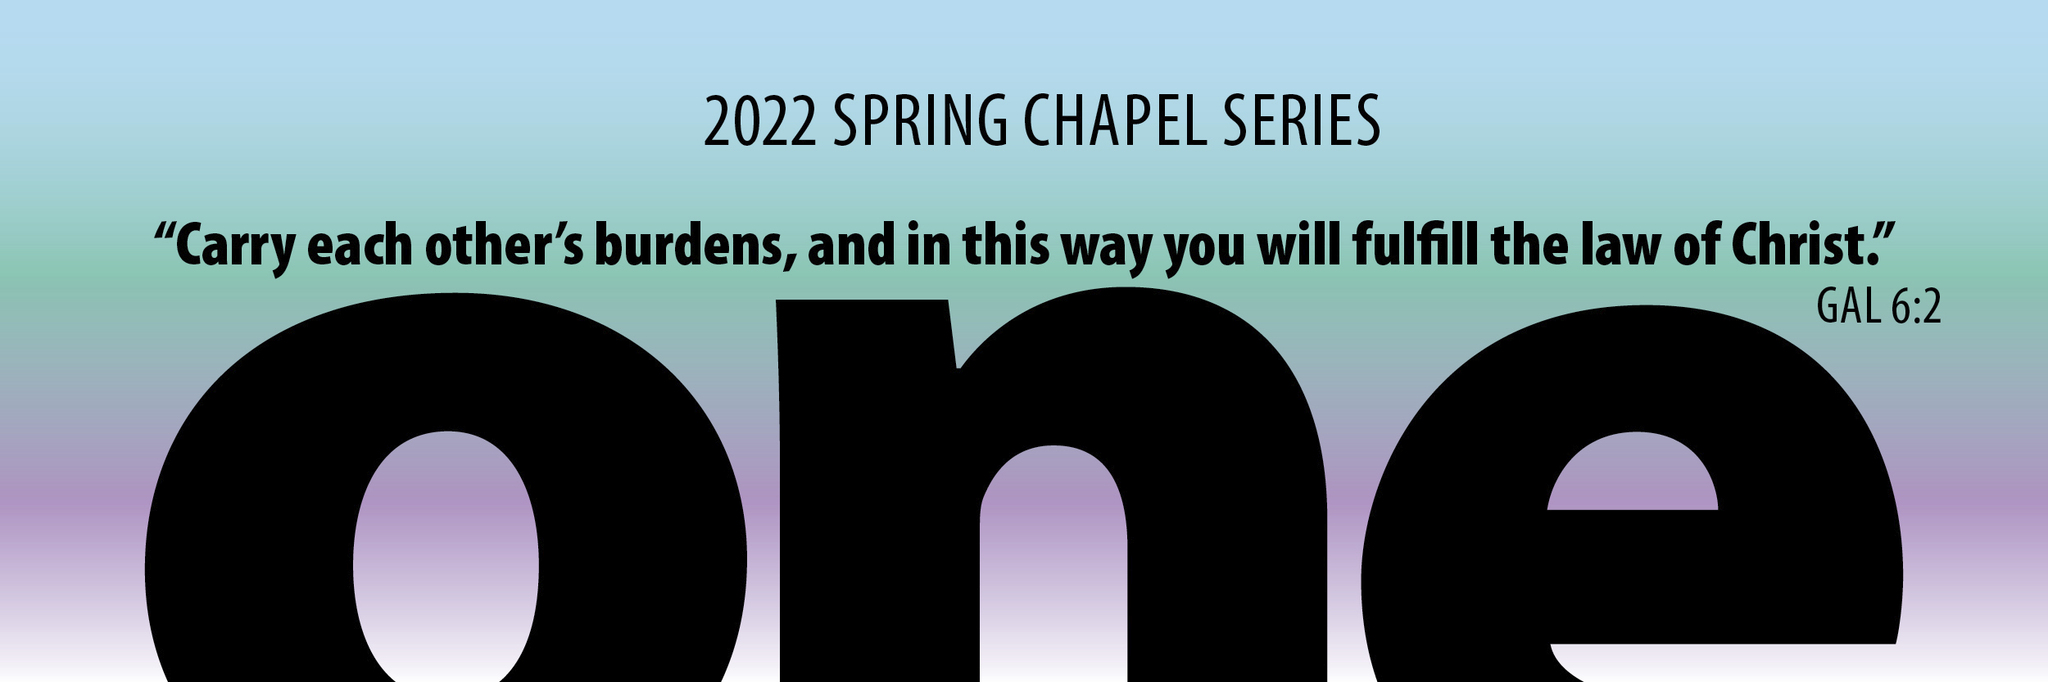 2022 Spring Chapel Series